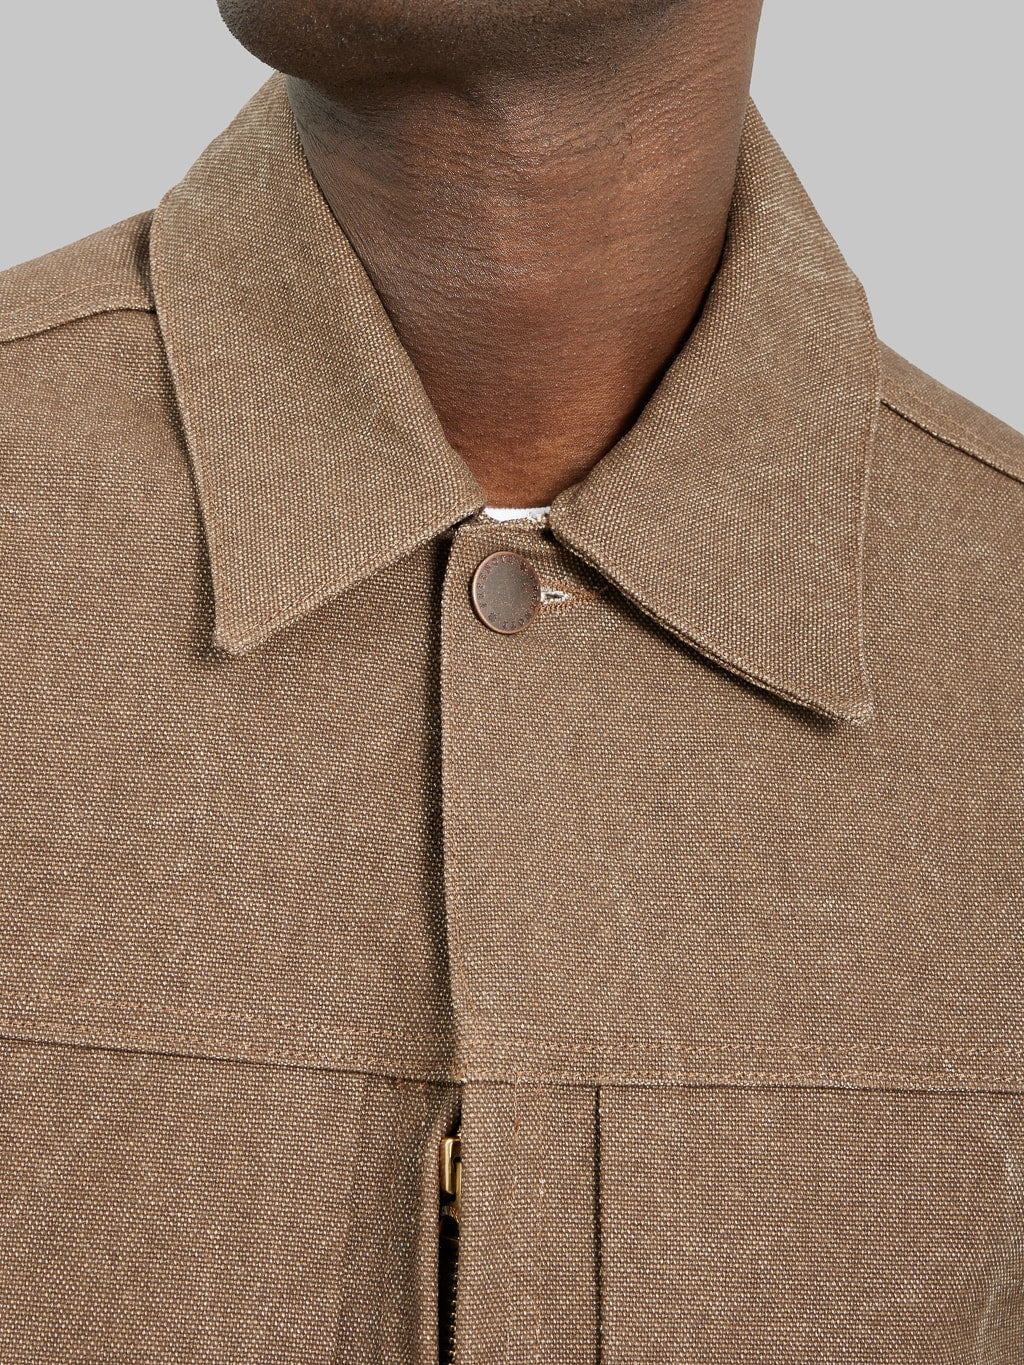 Freenote Cloth CD 4 Jacket Brown  collar detail